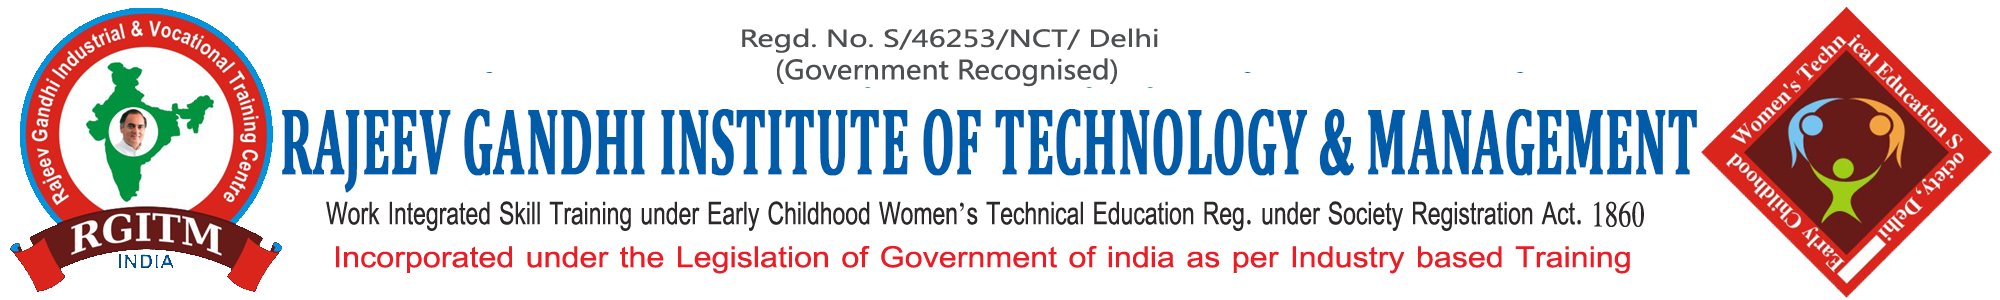 Rajeev Gandhi Institute of Technology & Management Logo